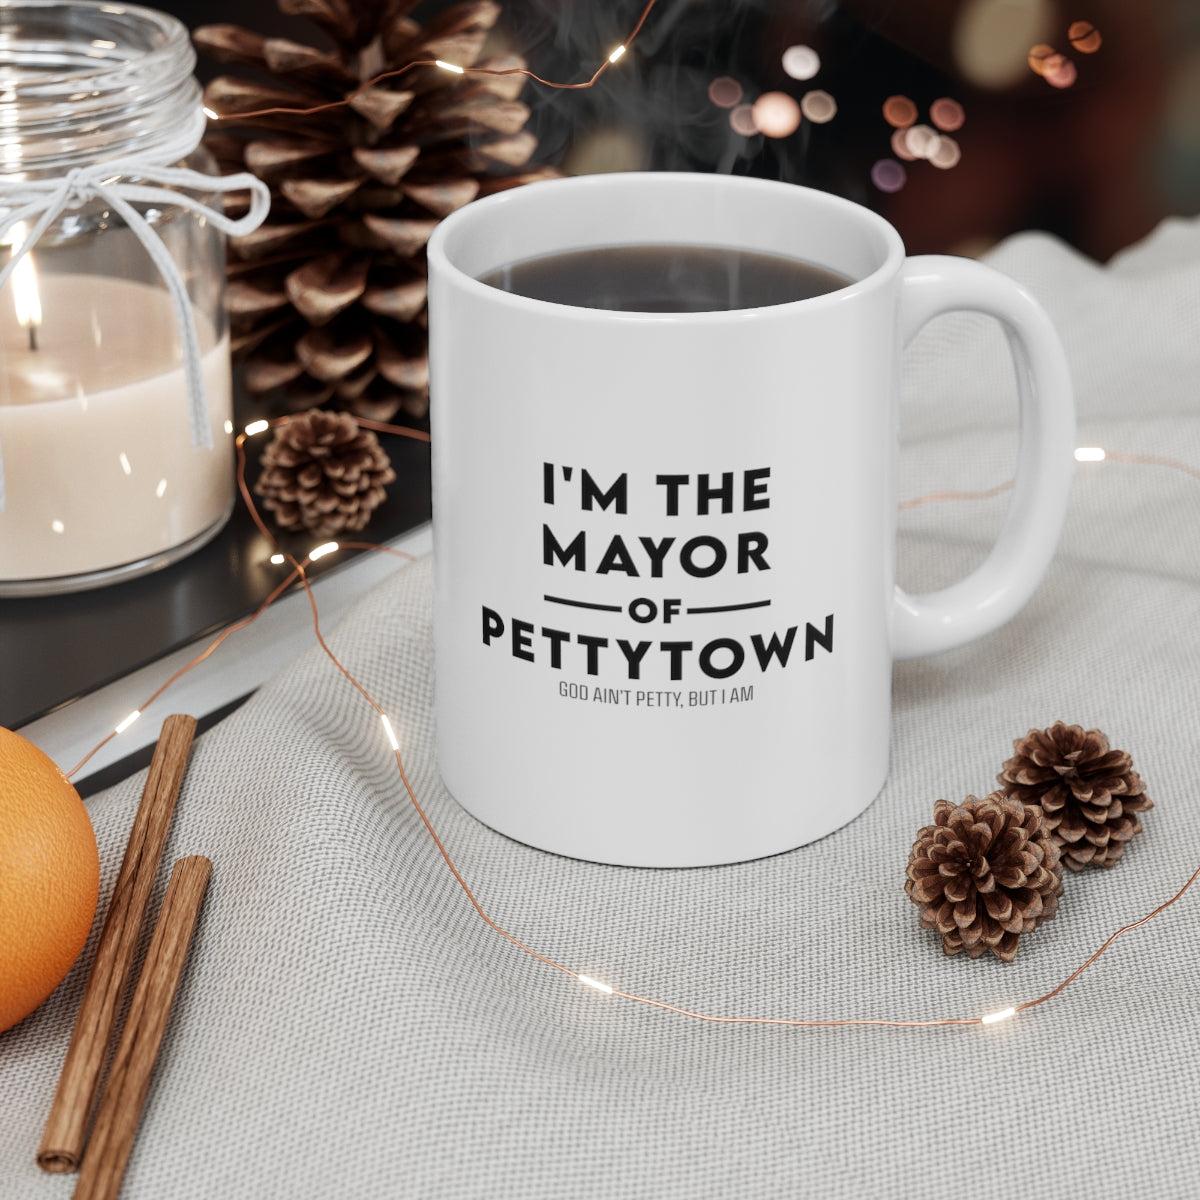 I'm the Mayor of Pettytown Mug 11oz (White/Black)-Mug-The Original God Ain't Petty But I Am